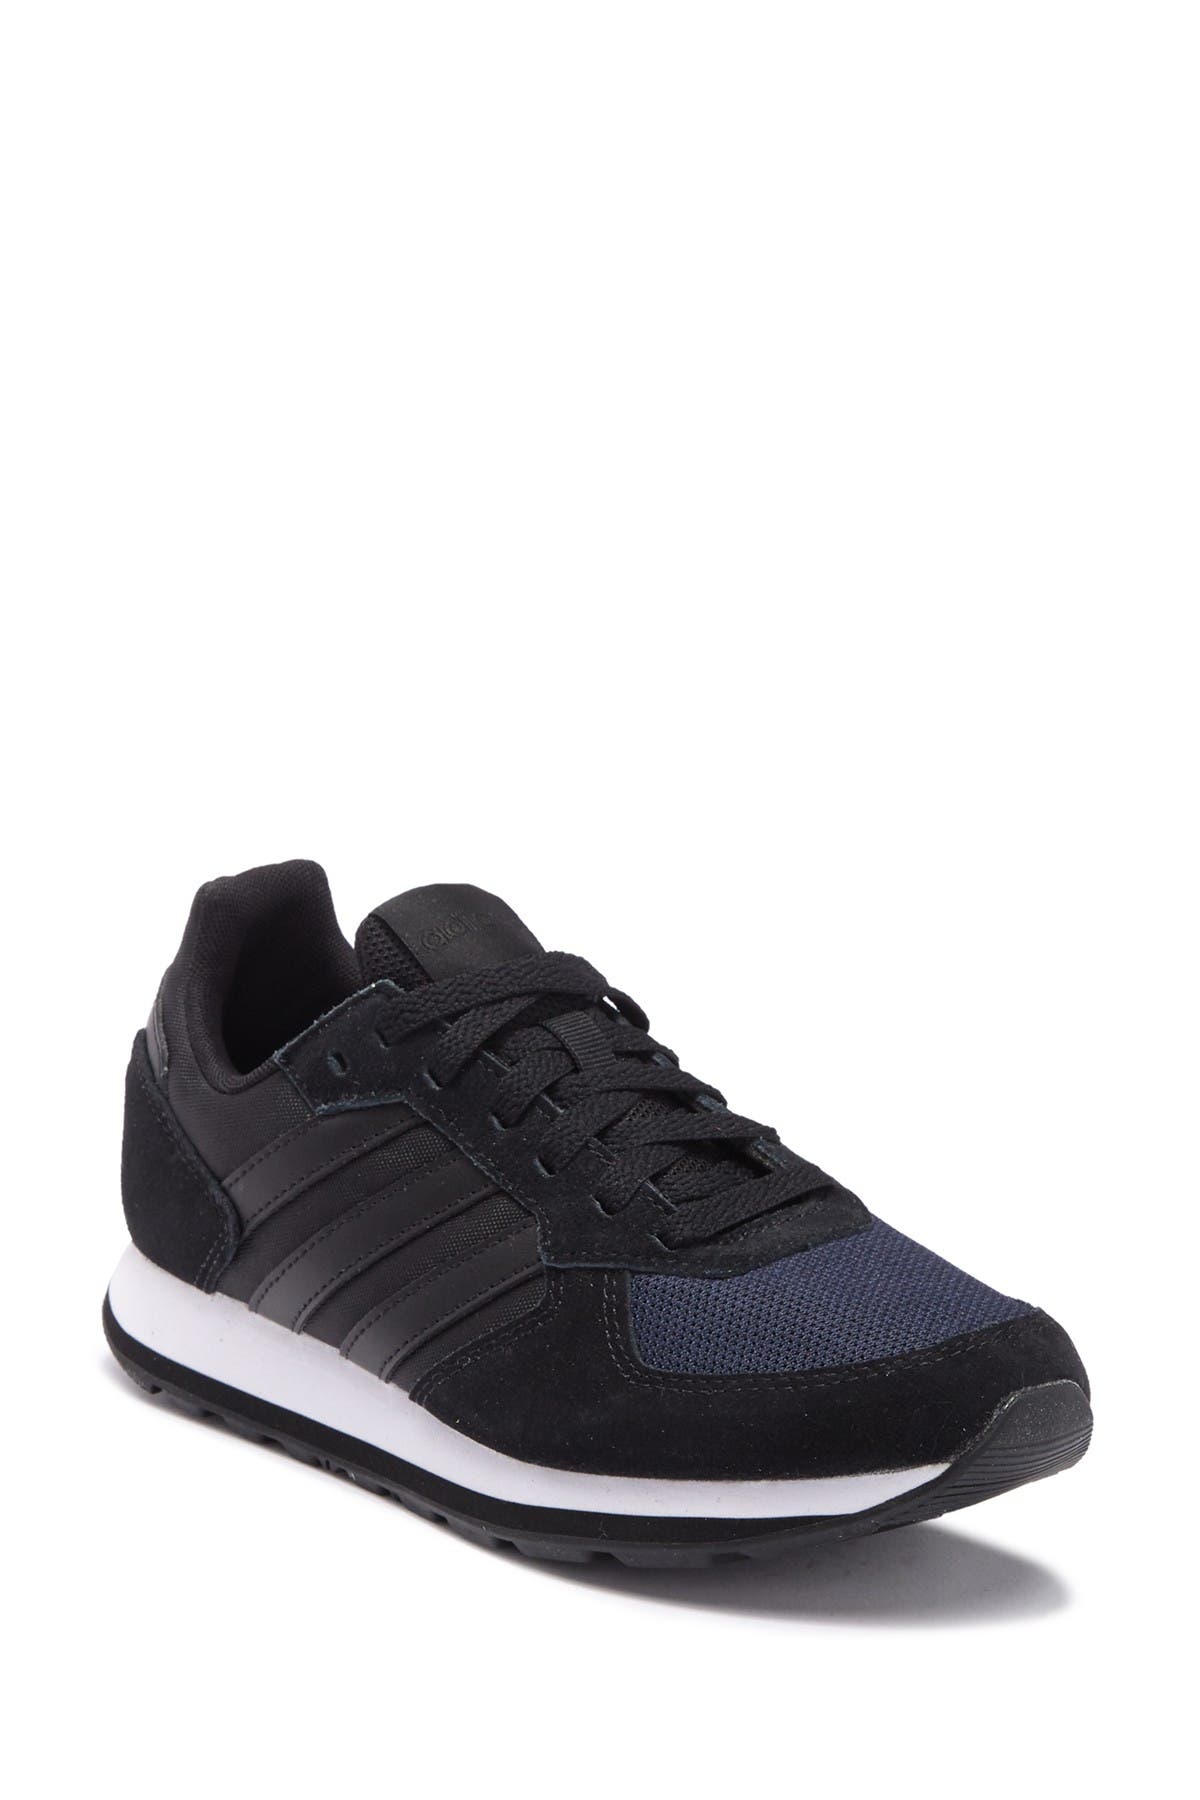 adidas 8k black running shoes